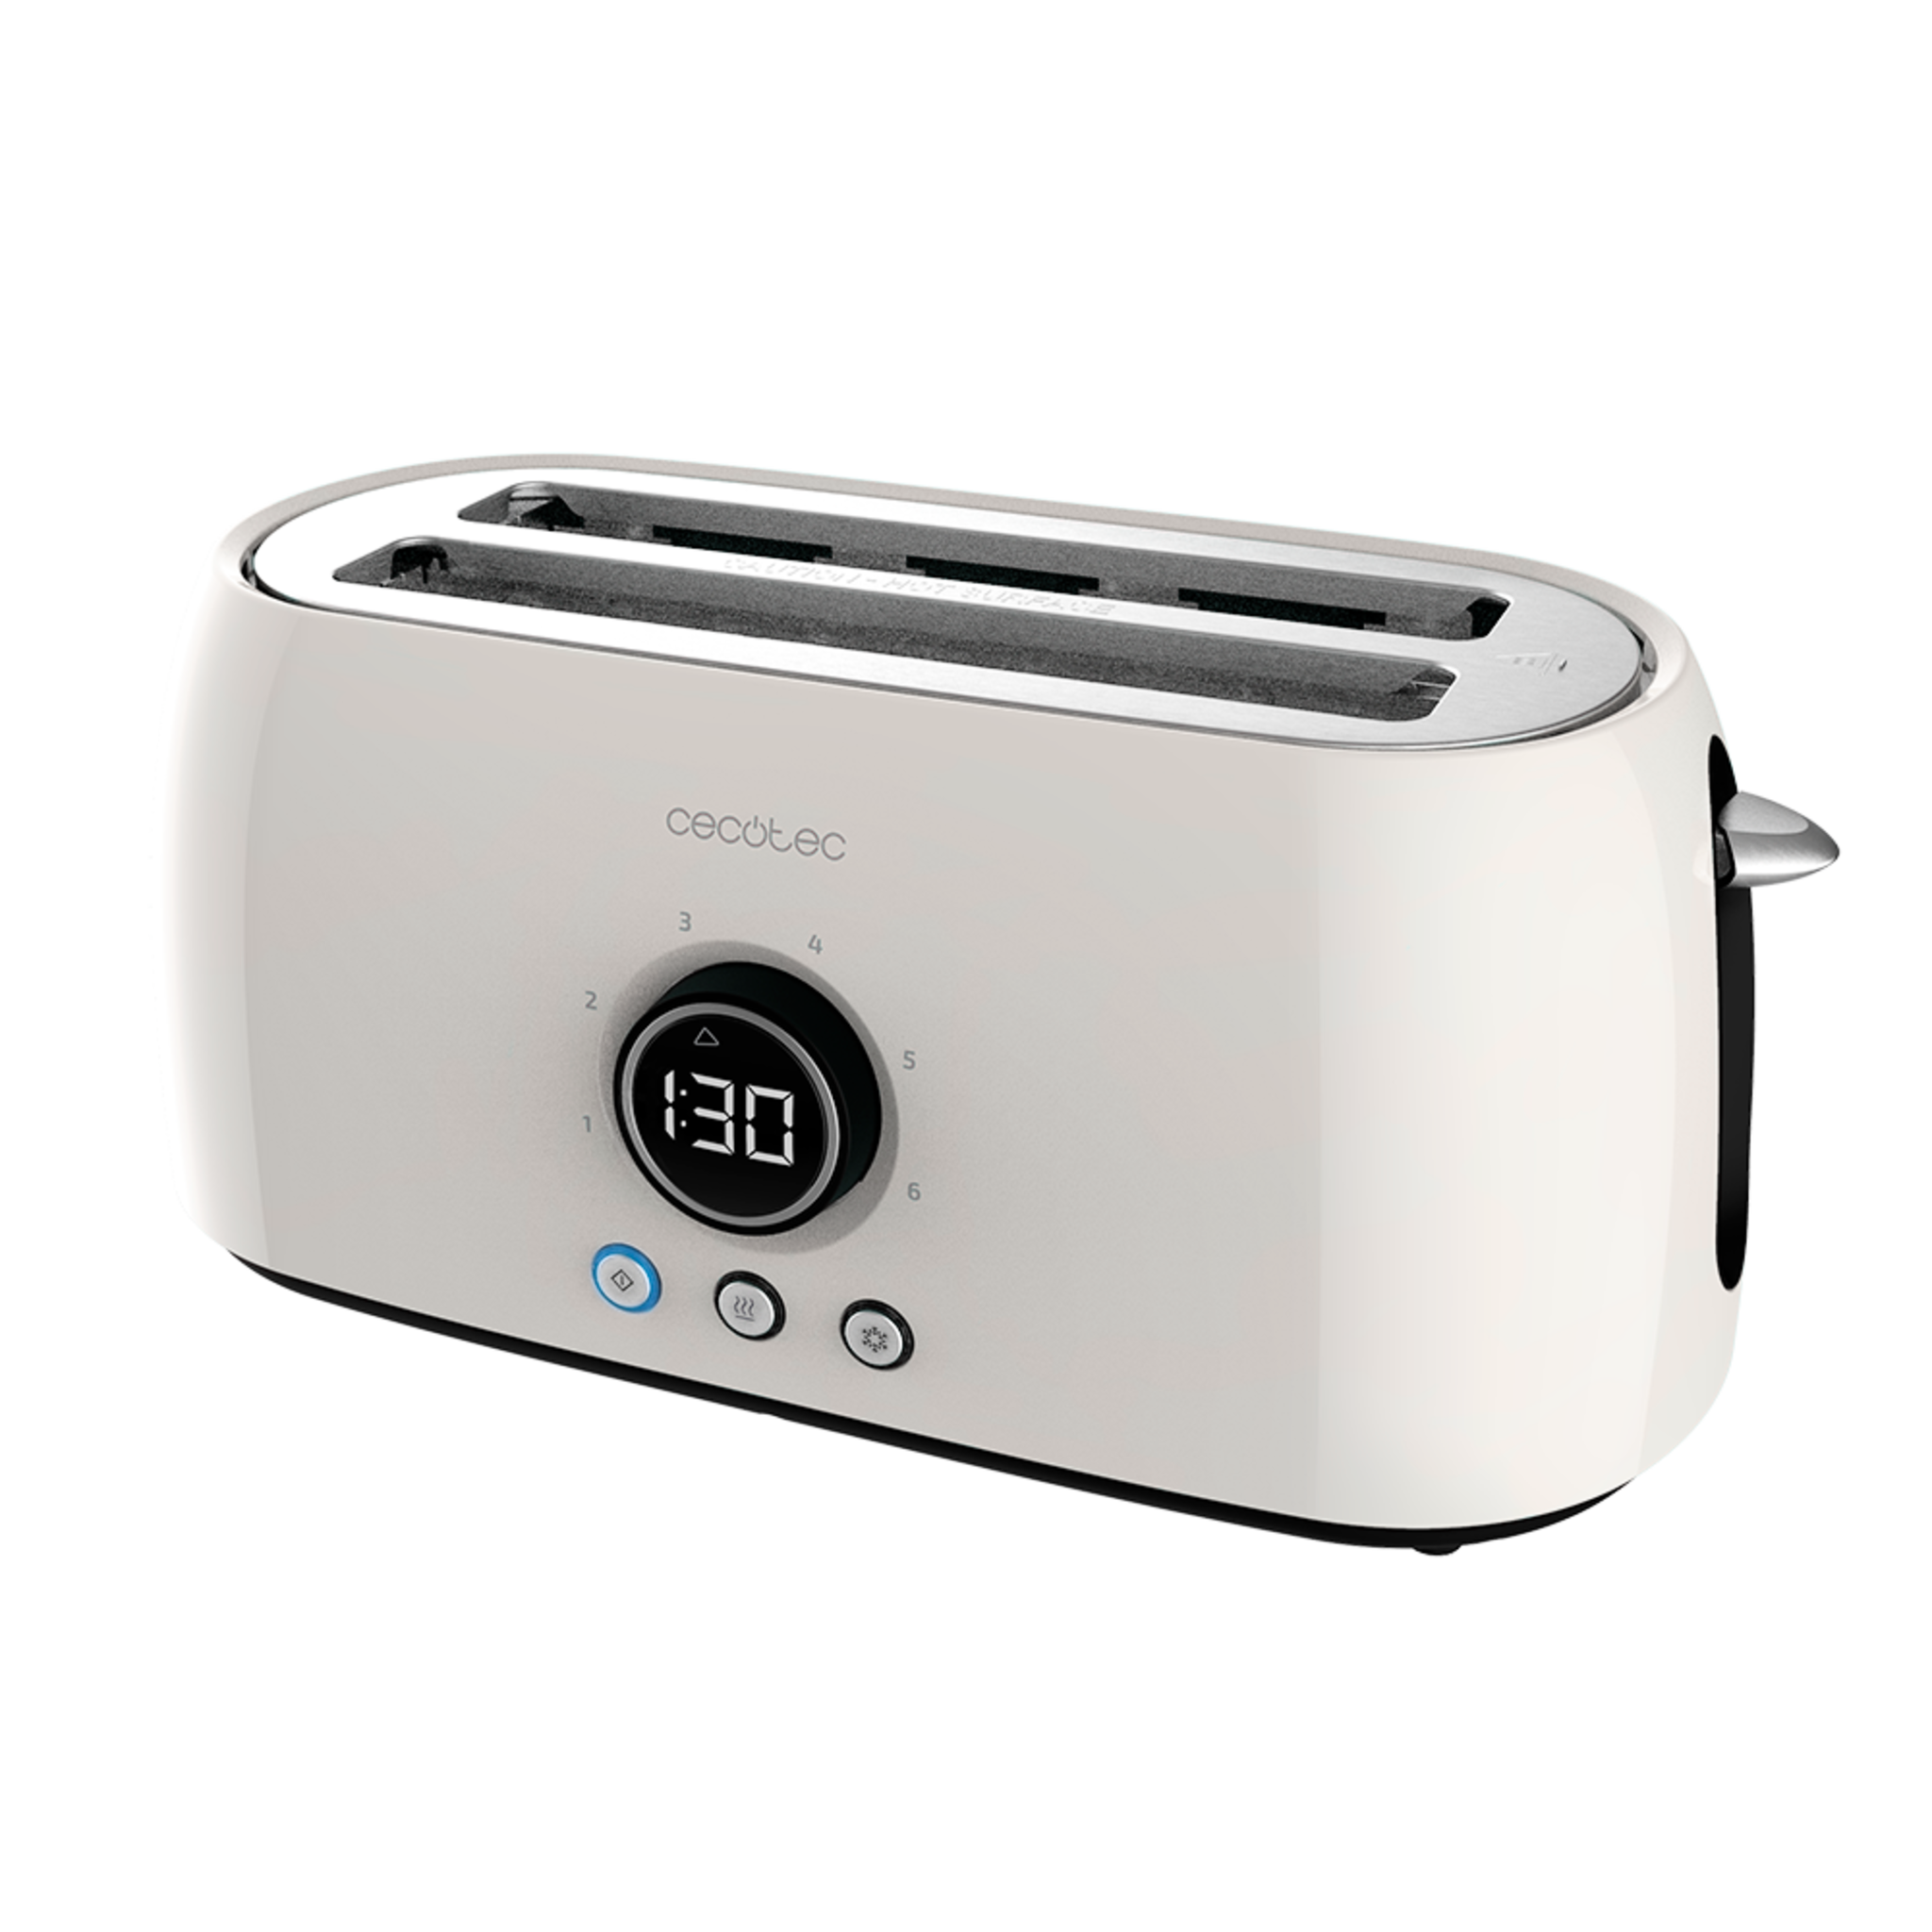 ClassicToast 15000 Beige Extra Double Digital Toaster